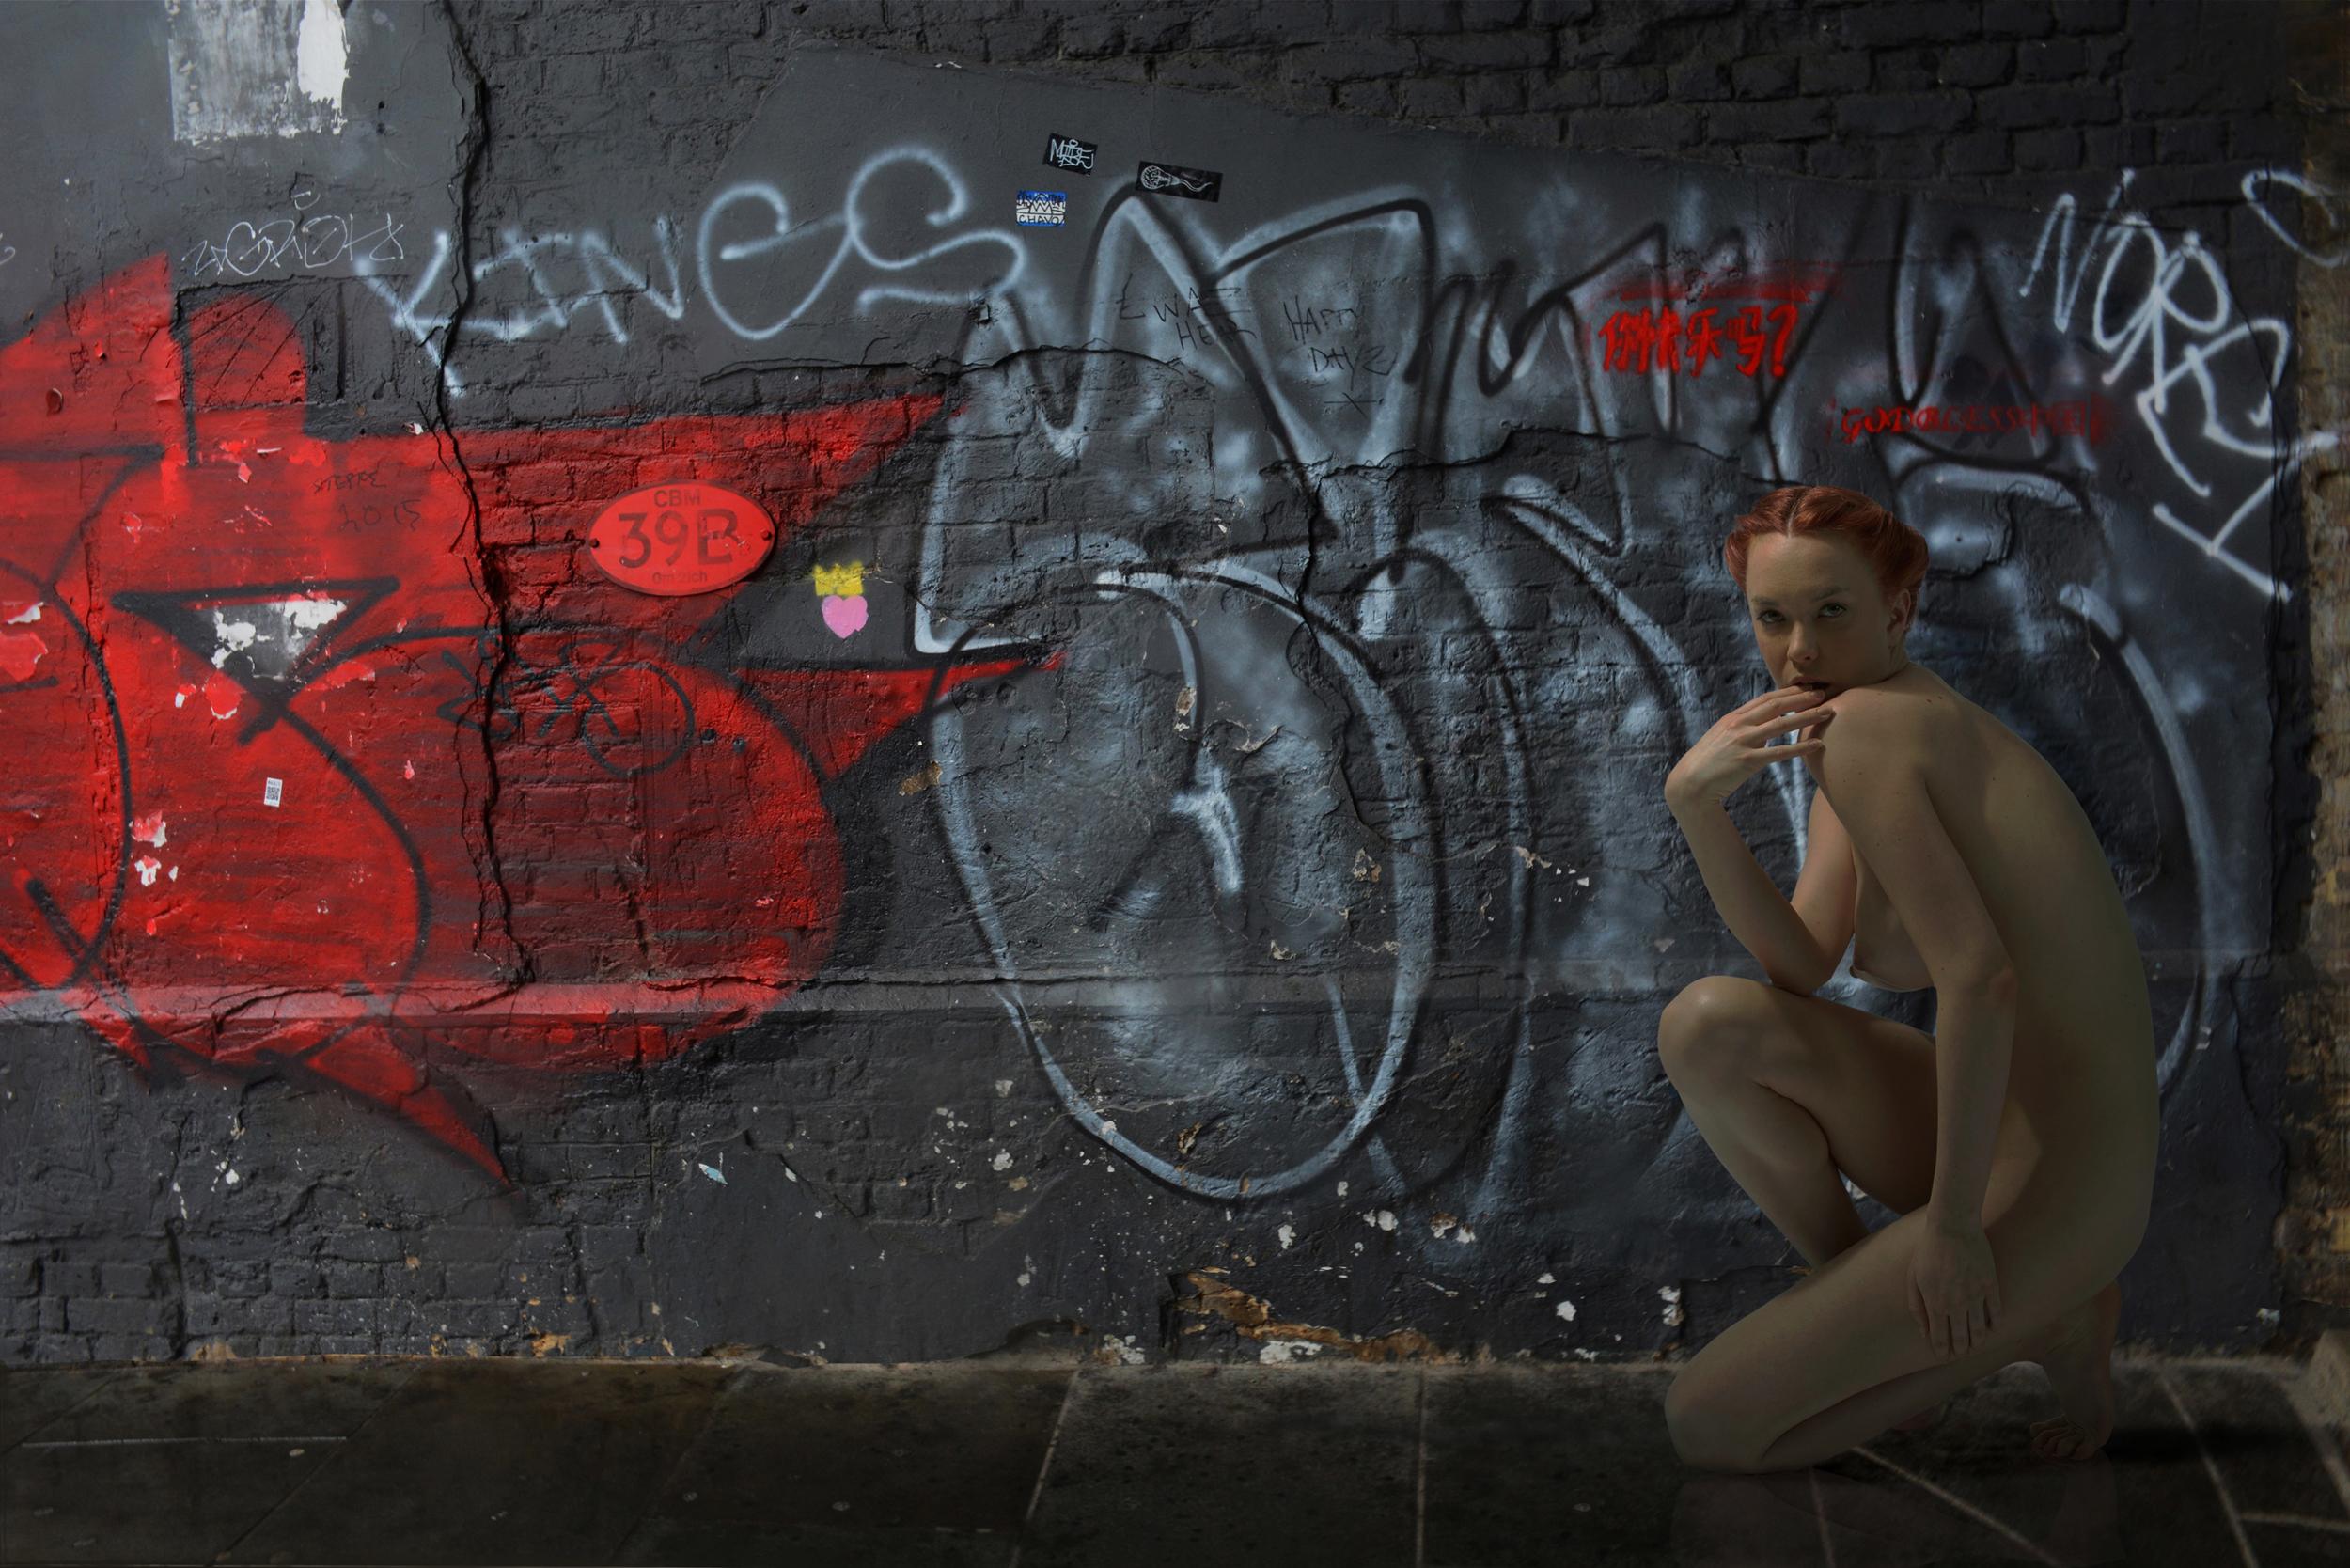 American Contemporary Photo by Michael Yamaoka - London Graffiti - Photograph by Michael K. Yamaoka 